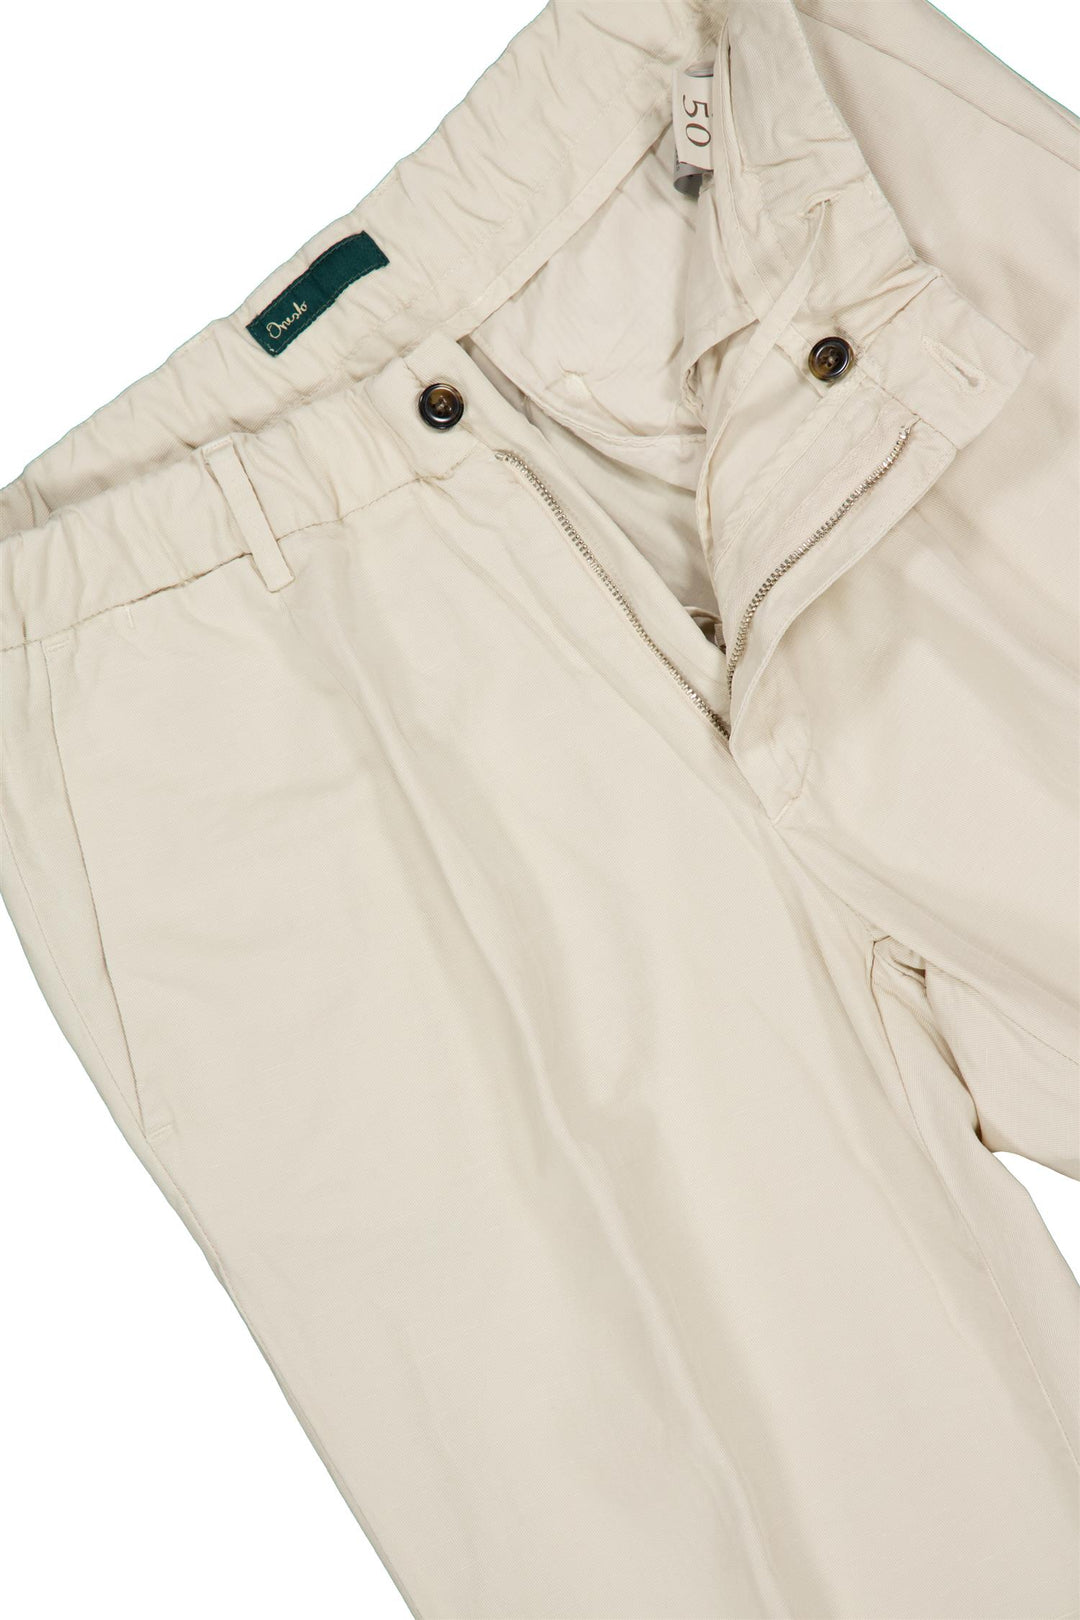 Capri Cotton/Linen Pant Off-White